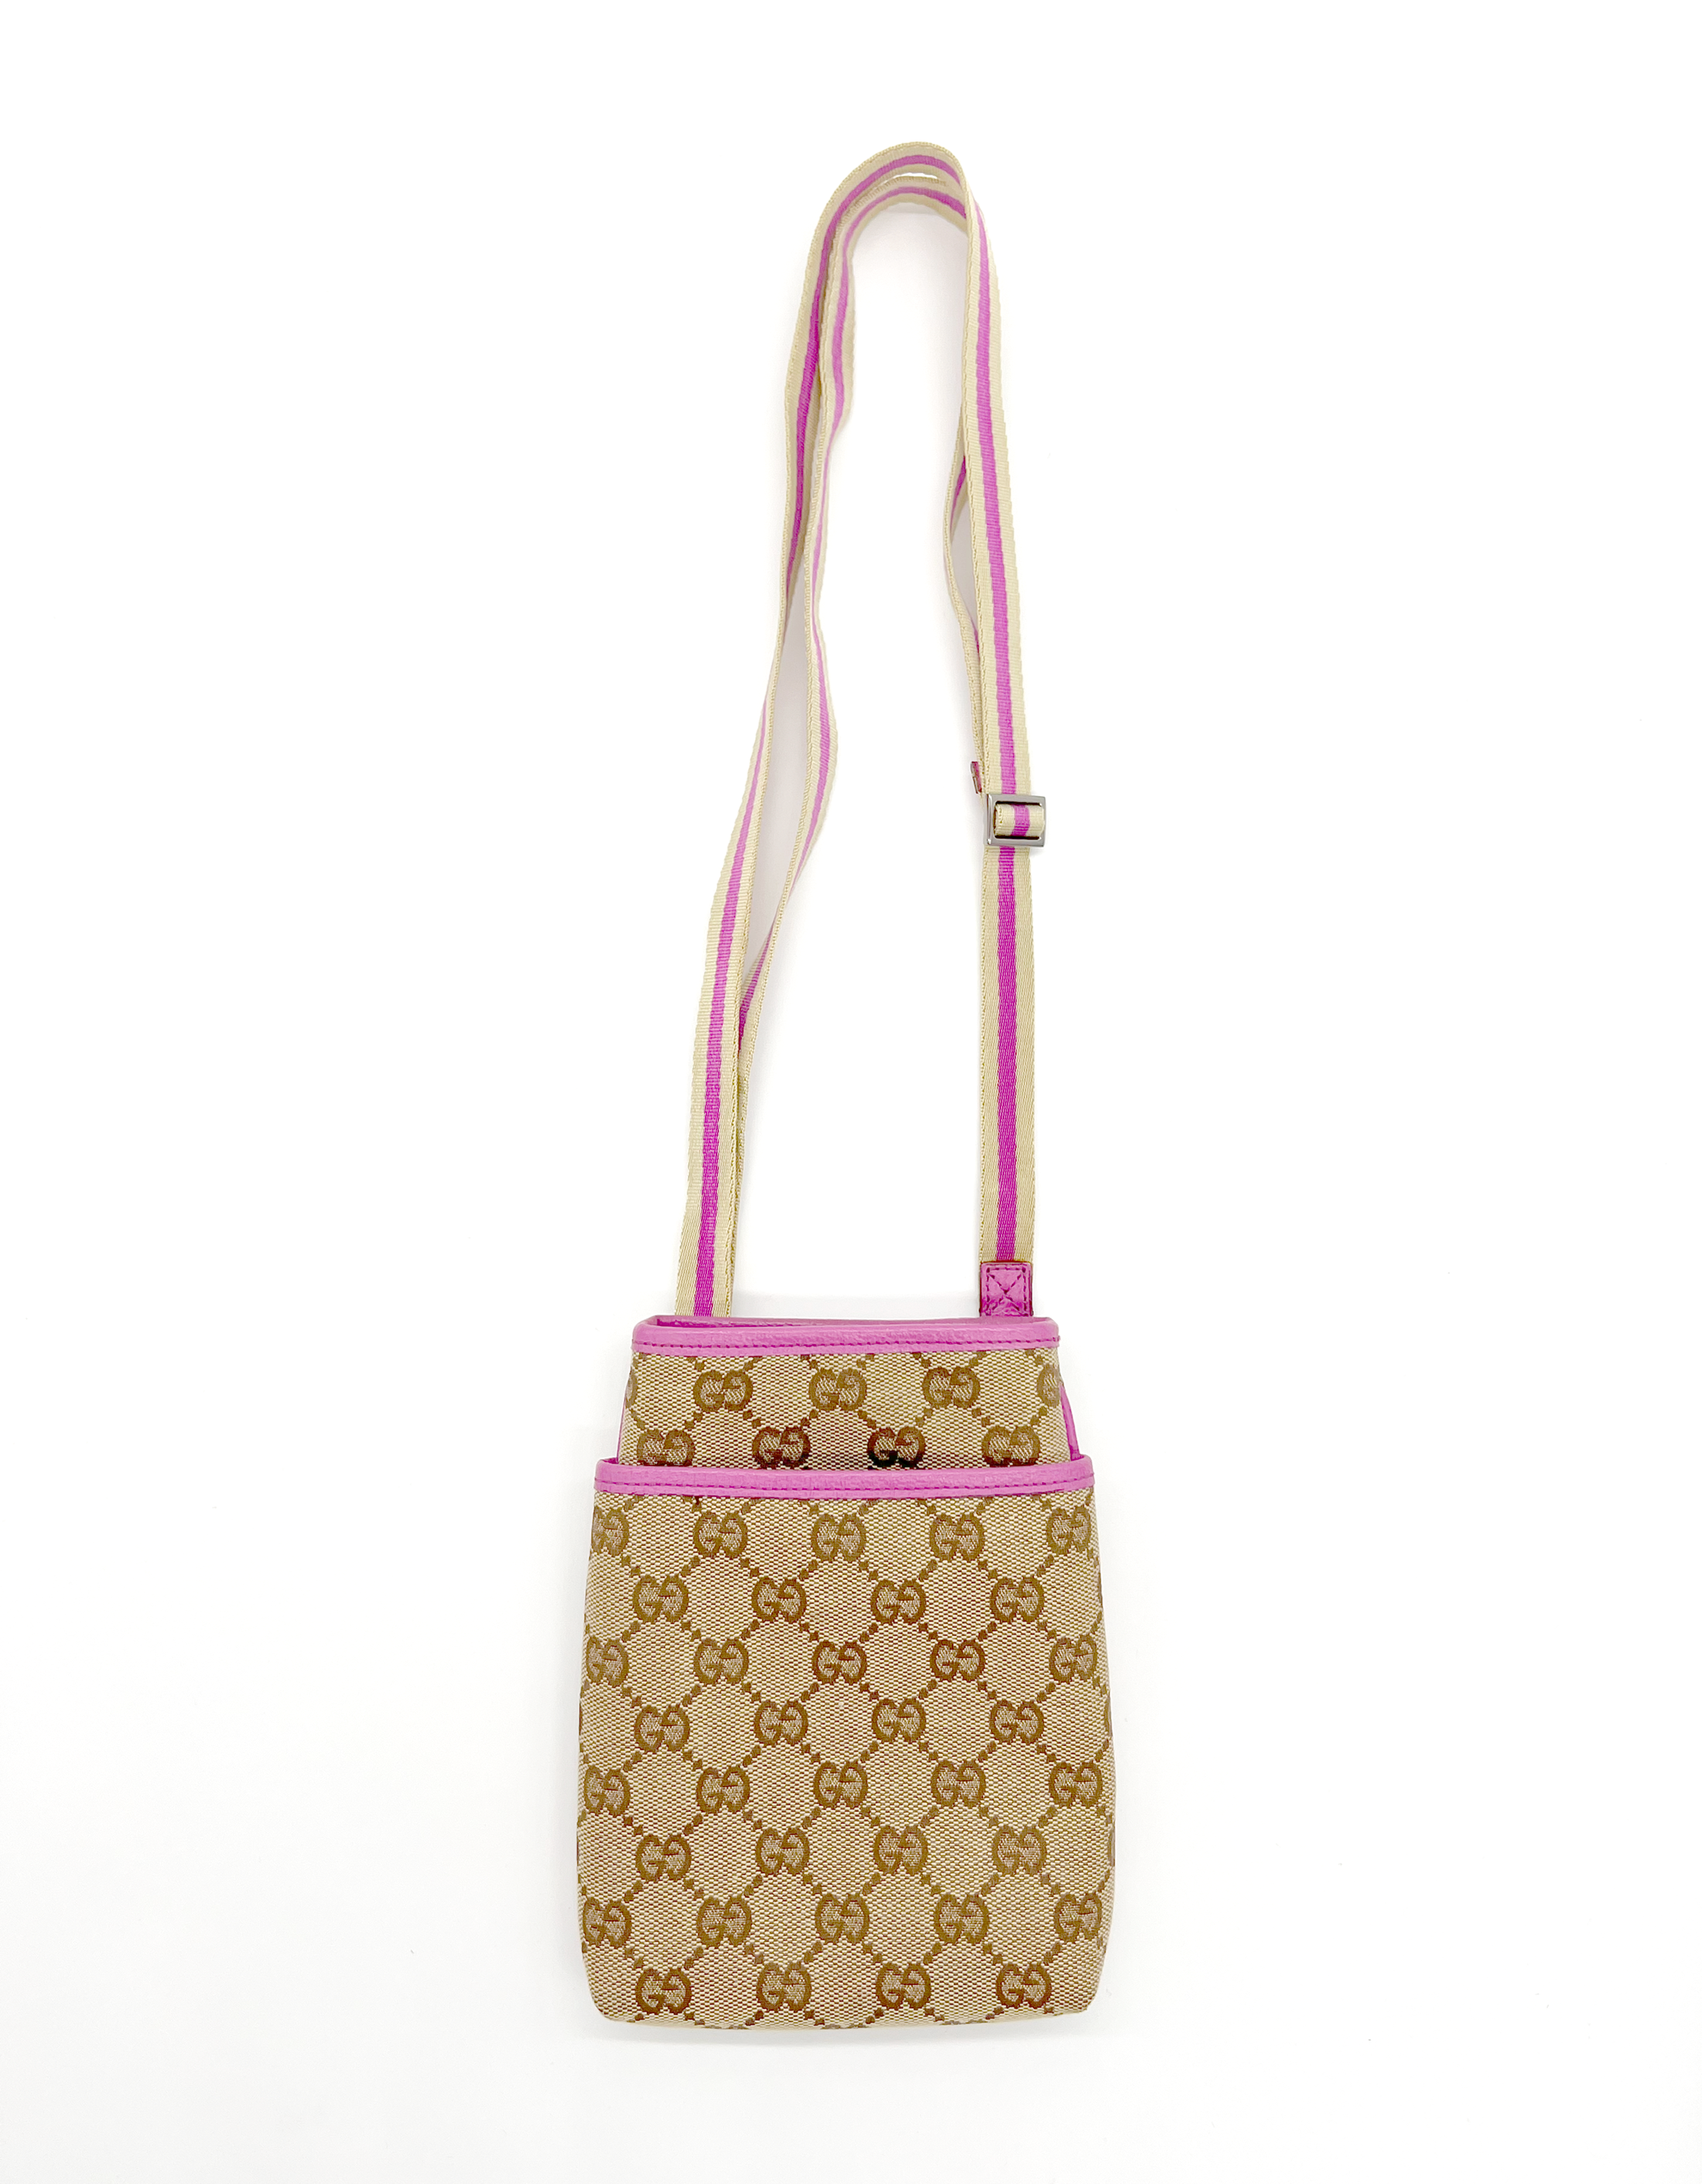 GUCCI Gucci GG Canvas Web Crossbody Bag with Pink Trim - Vault 55